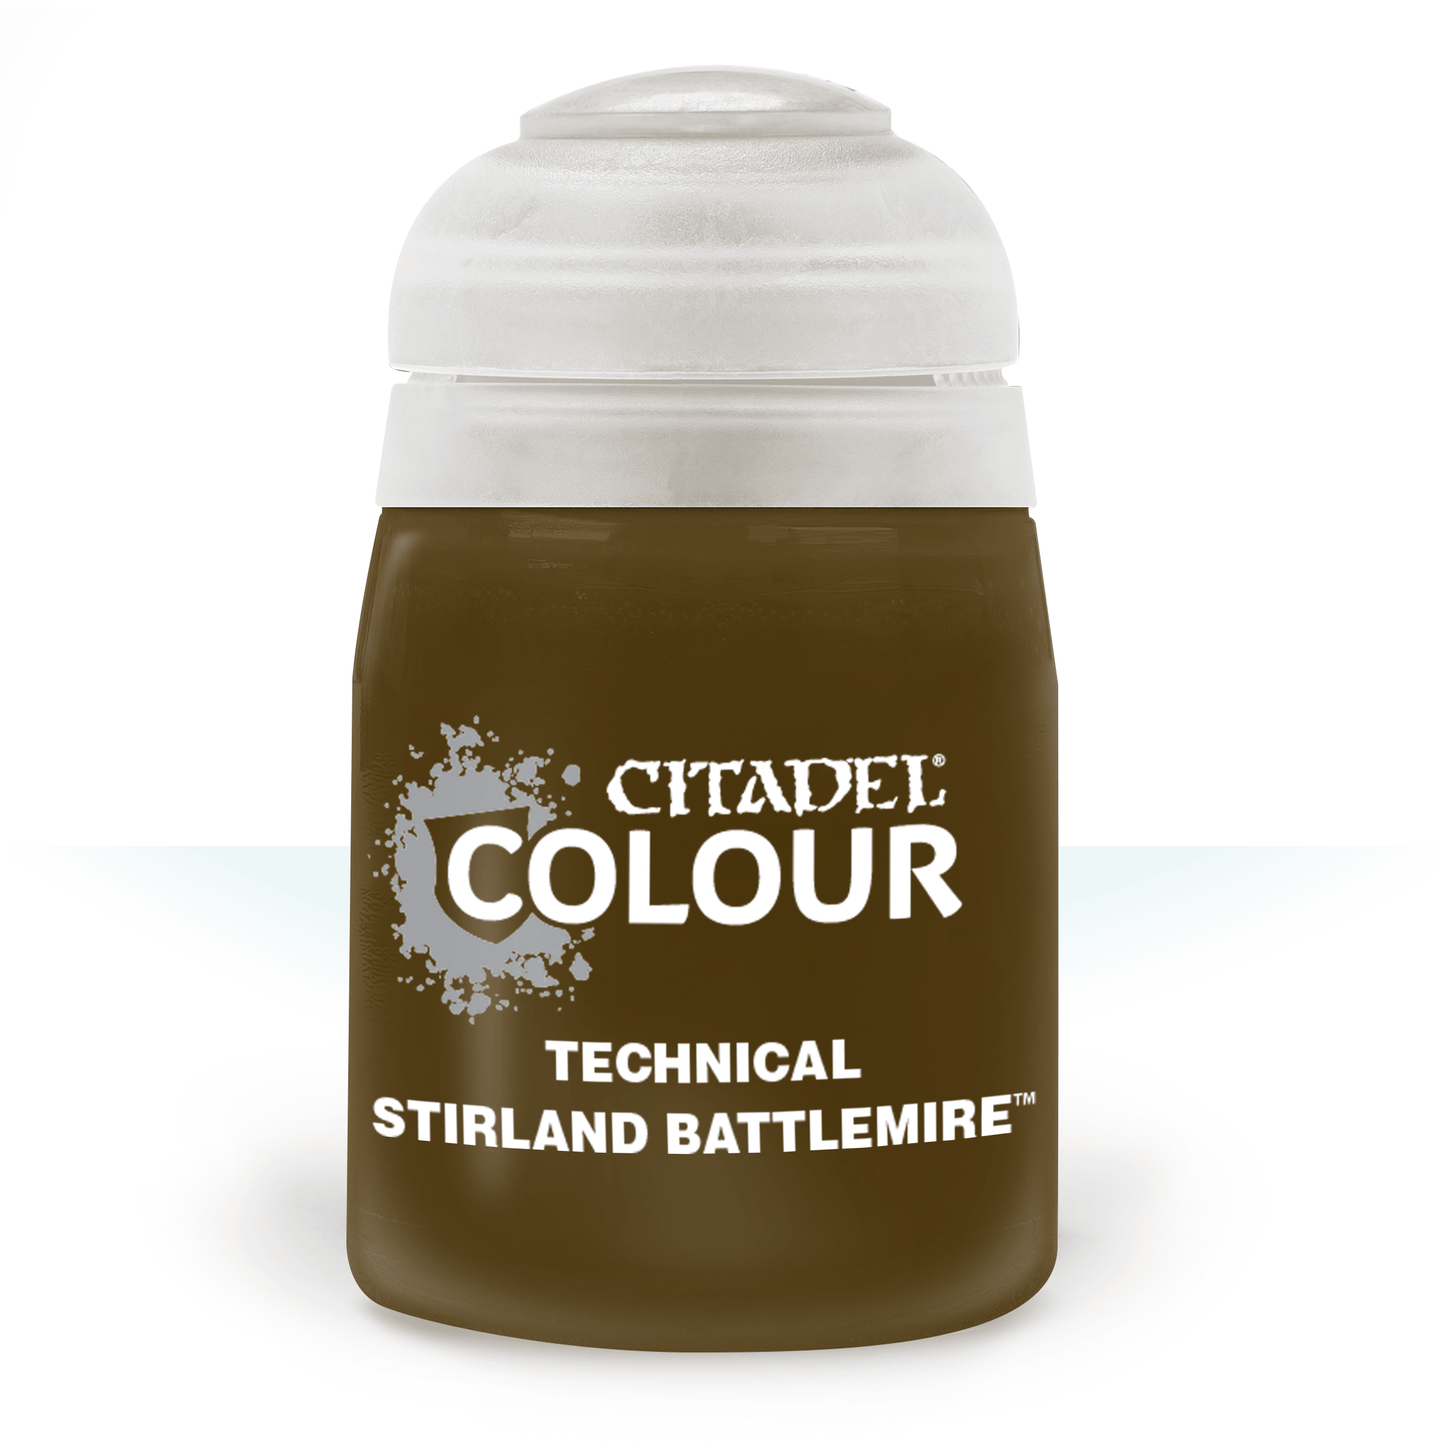 LAST ONE - Technical: Stirland Battlemire